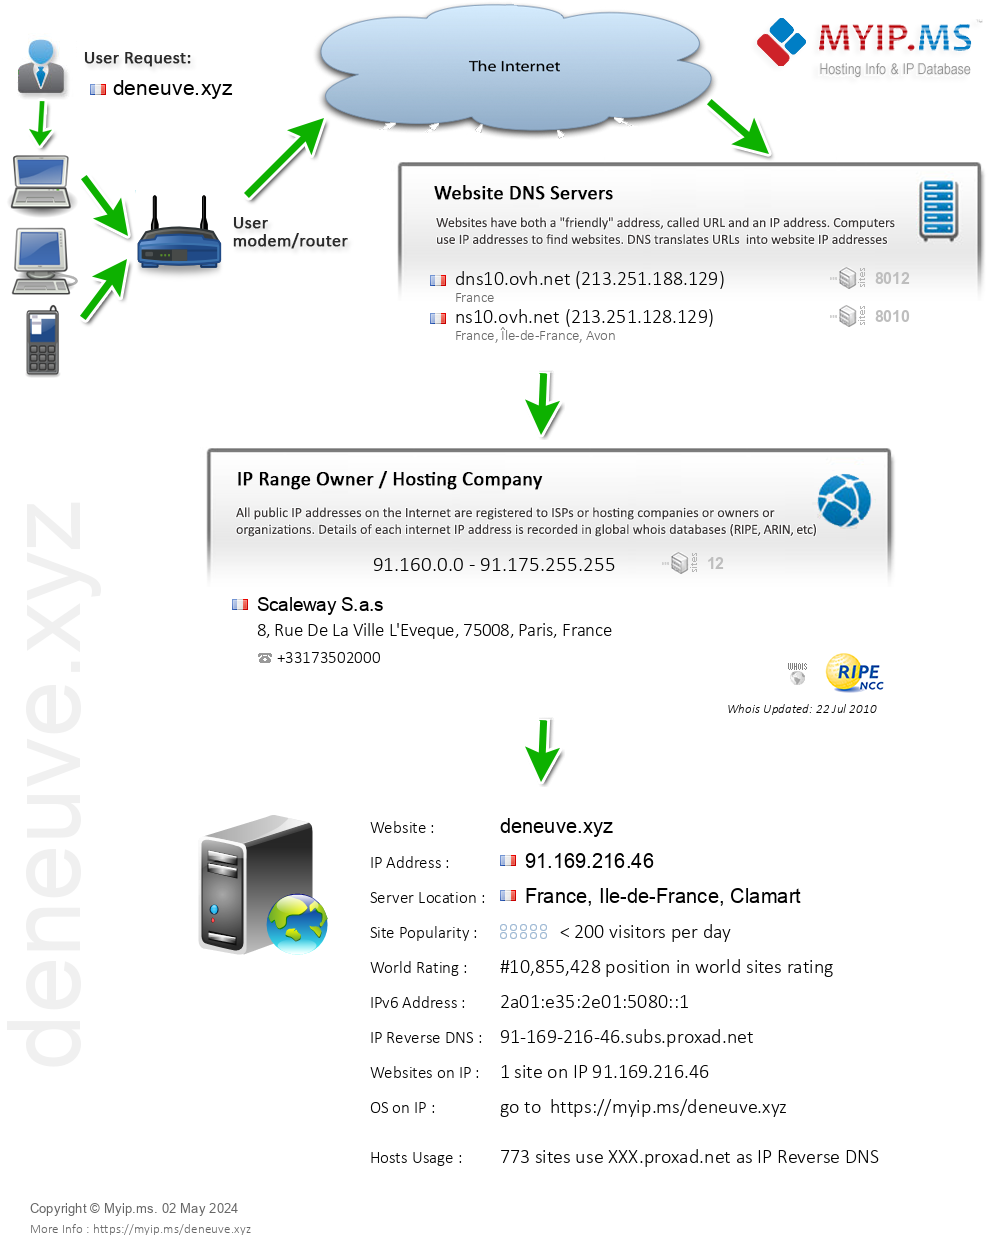 Deneuve.xyz - Website Hosting Visual IP Diagram